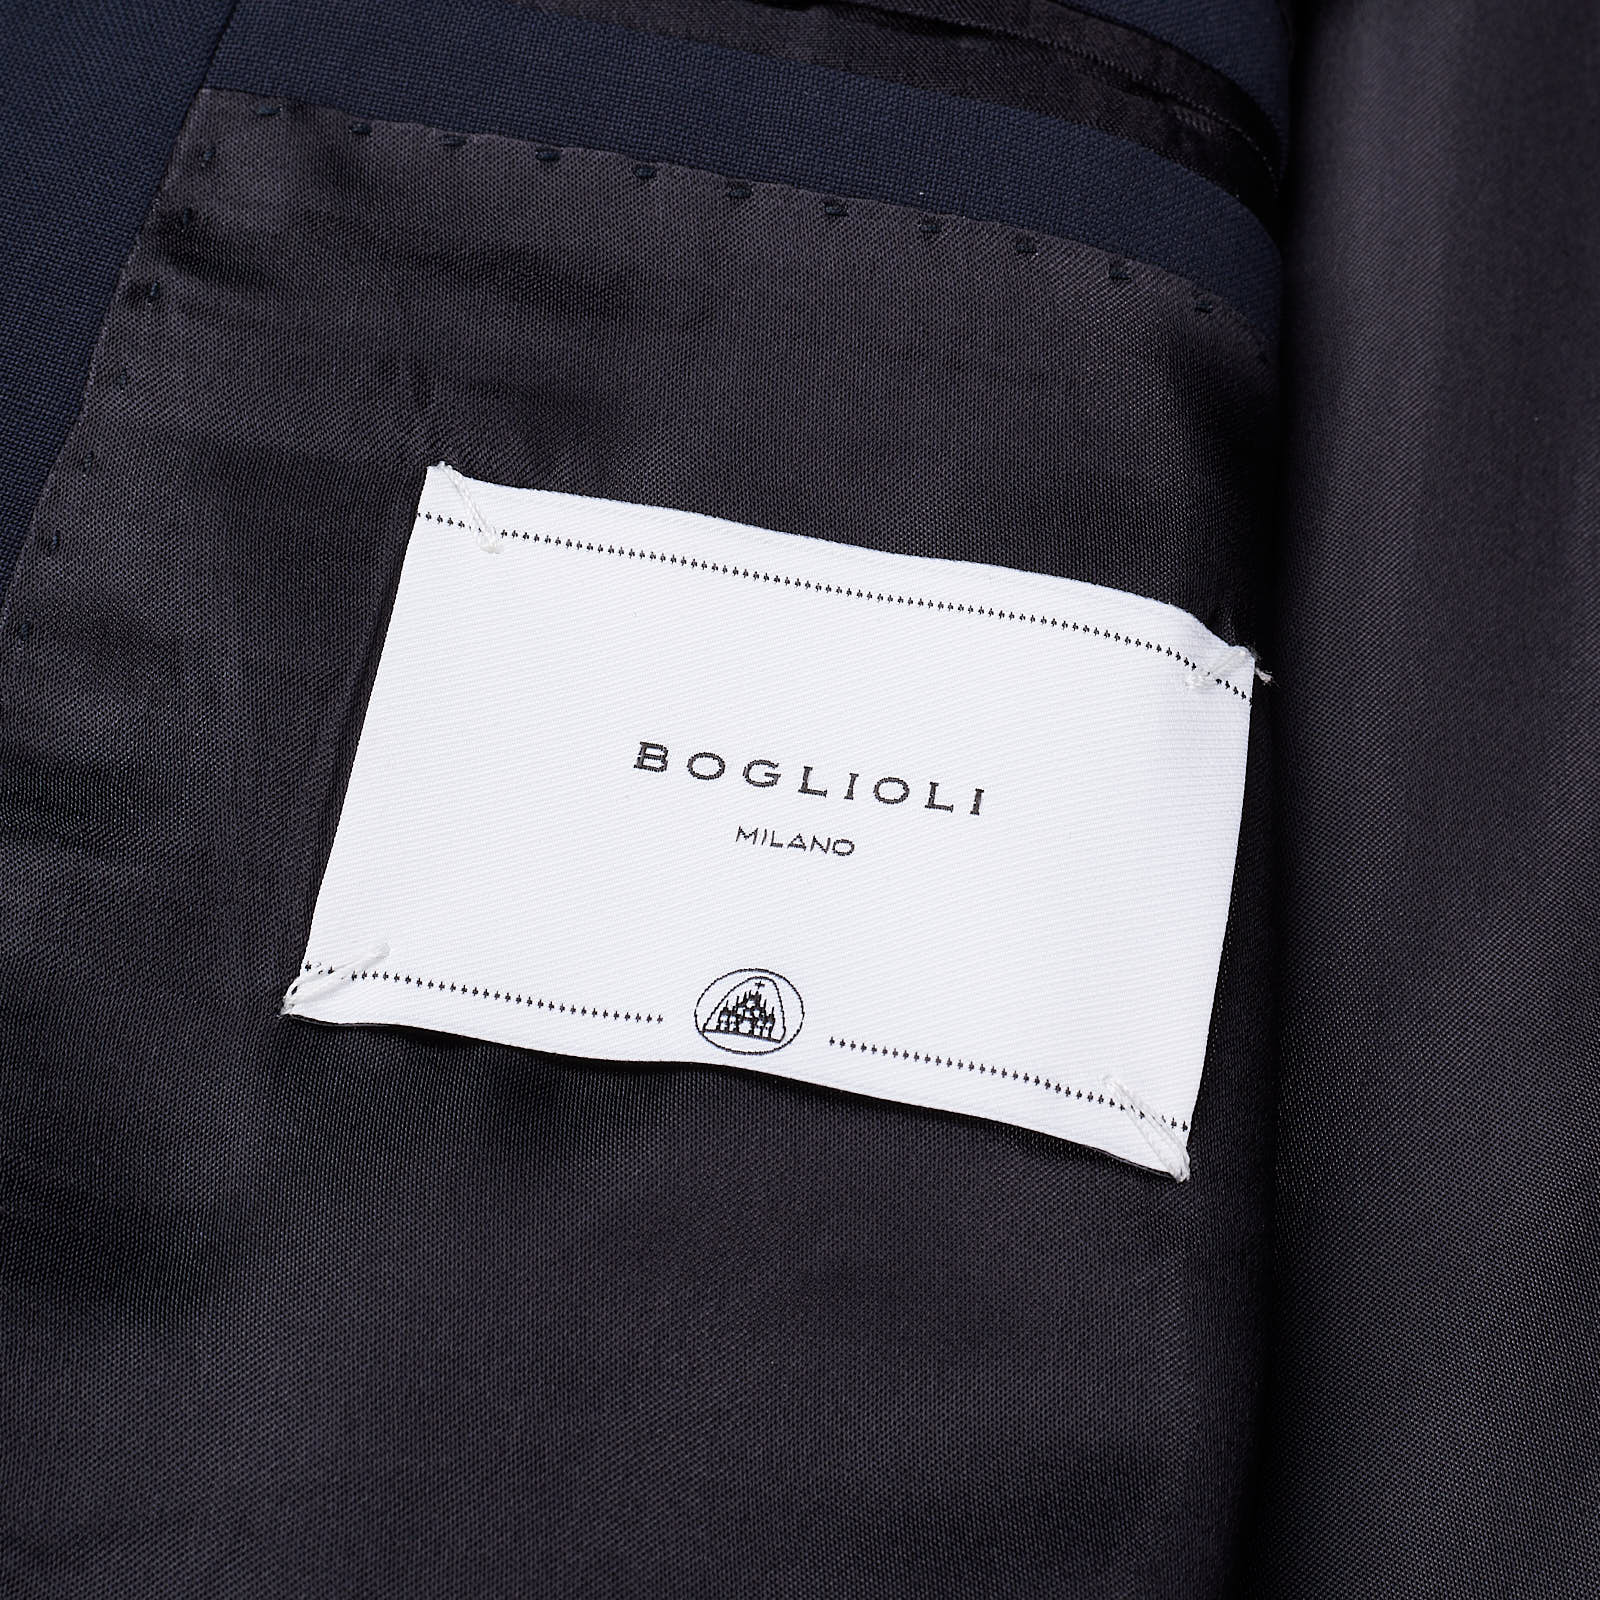 BOGLIOLI Milano "SFORZA" Blue Virgin Wool Suit EU 56 NEW US 44 46 Slim Fit